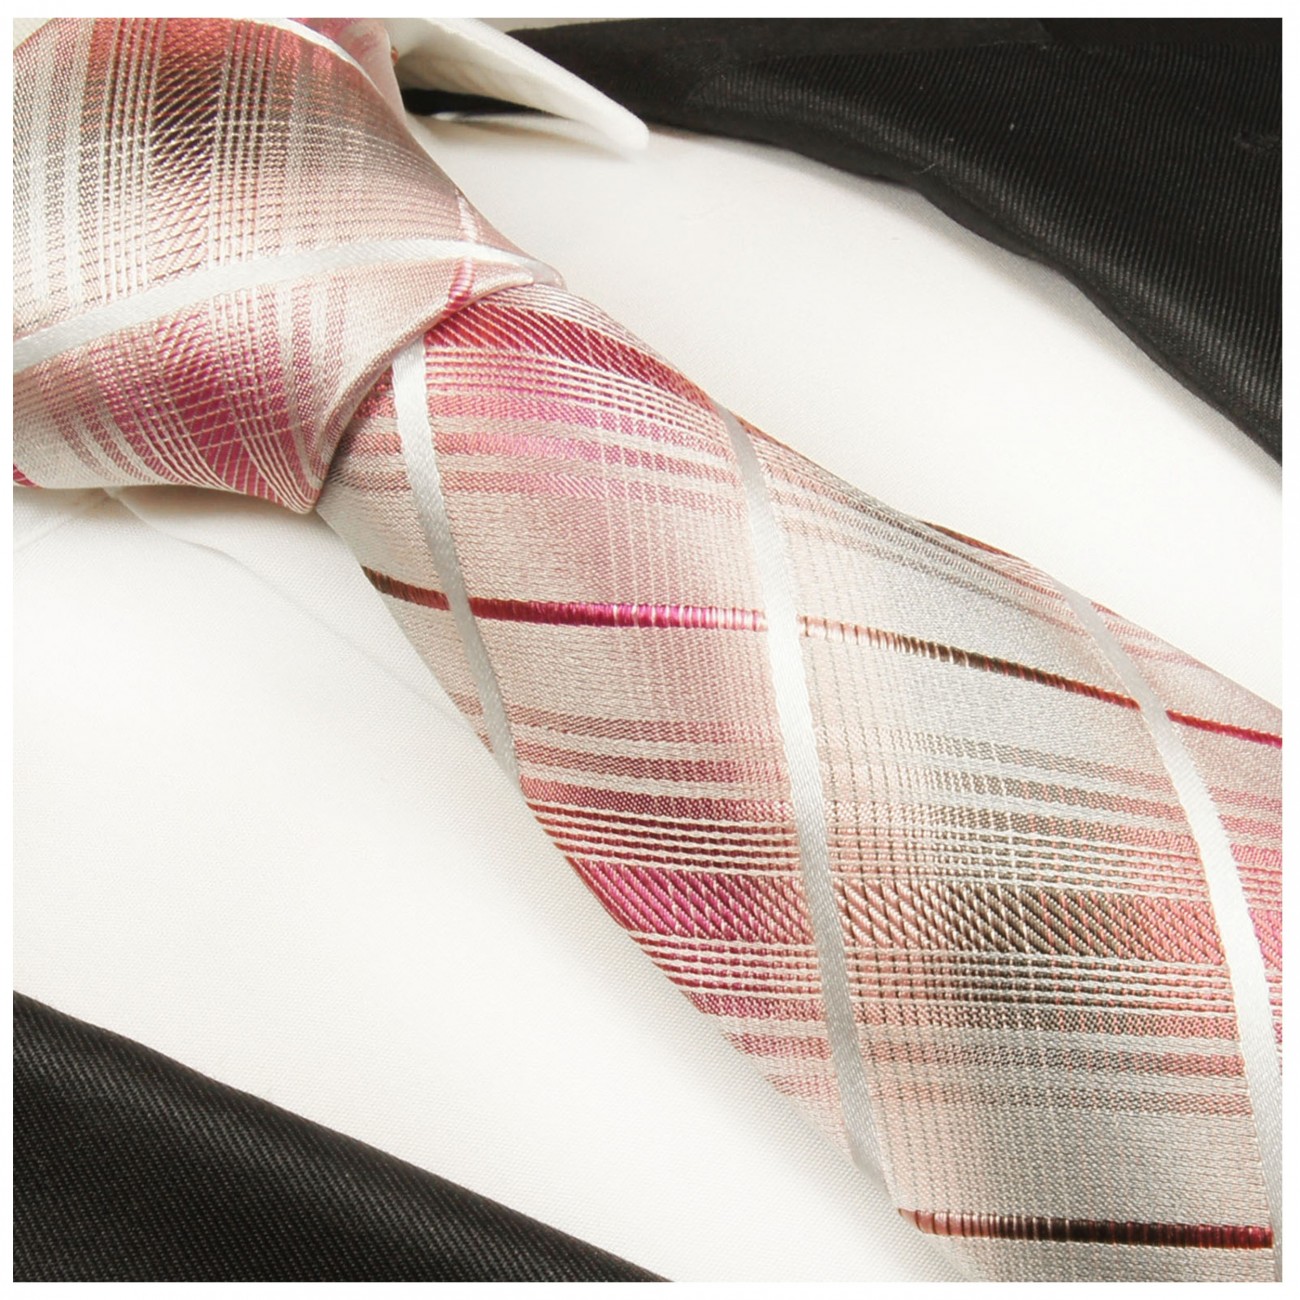 Krawatte pink grau weiß Seide gestreift